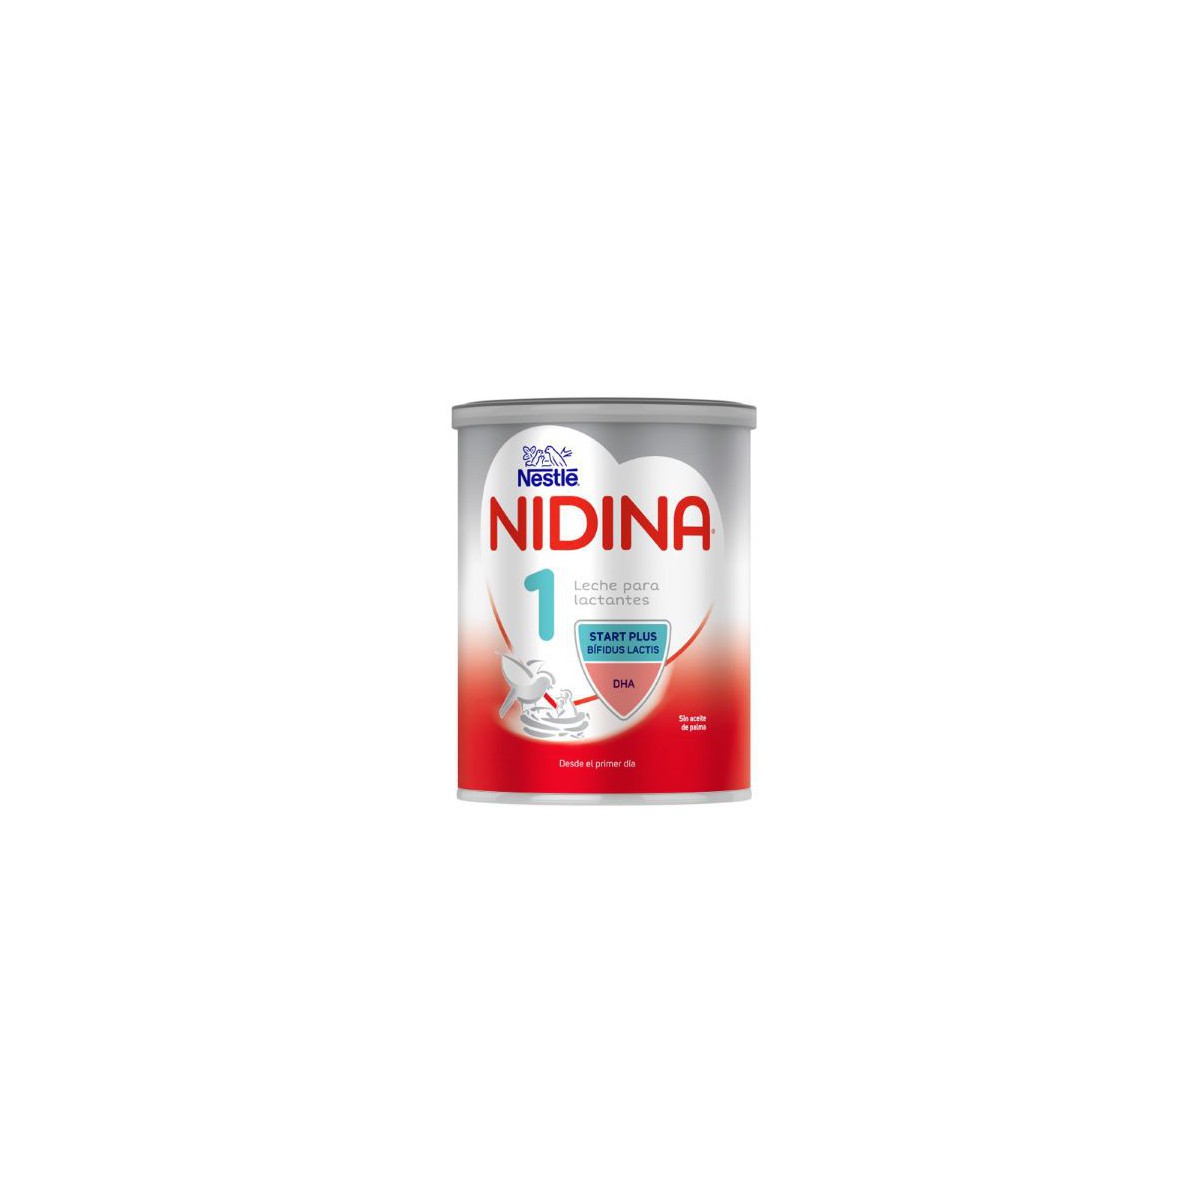 Nestlé Nidina 1 optipro milk powder 800 g